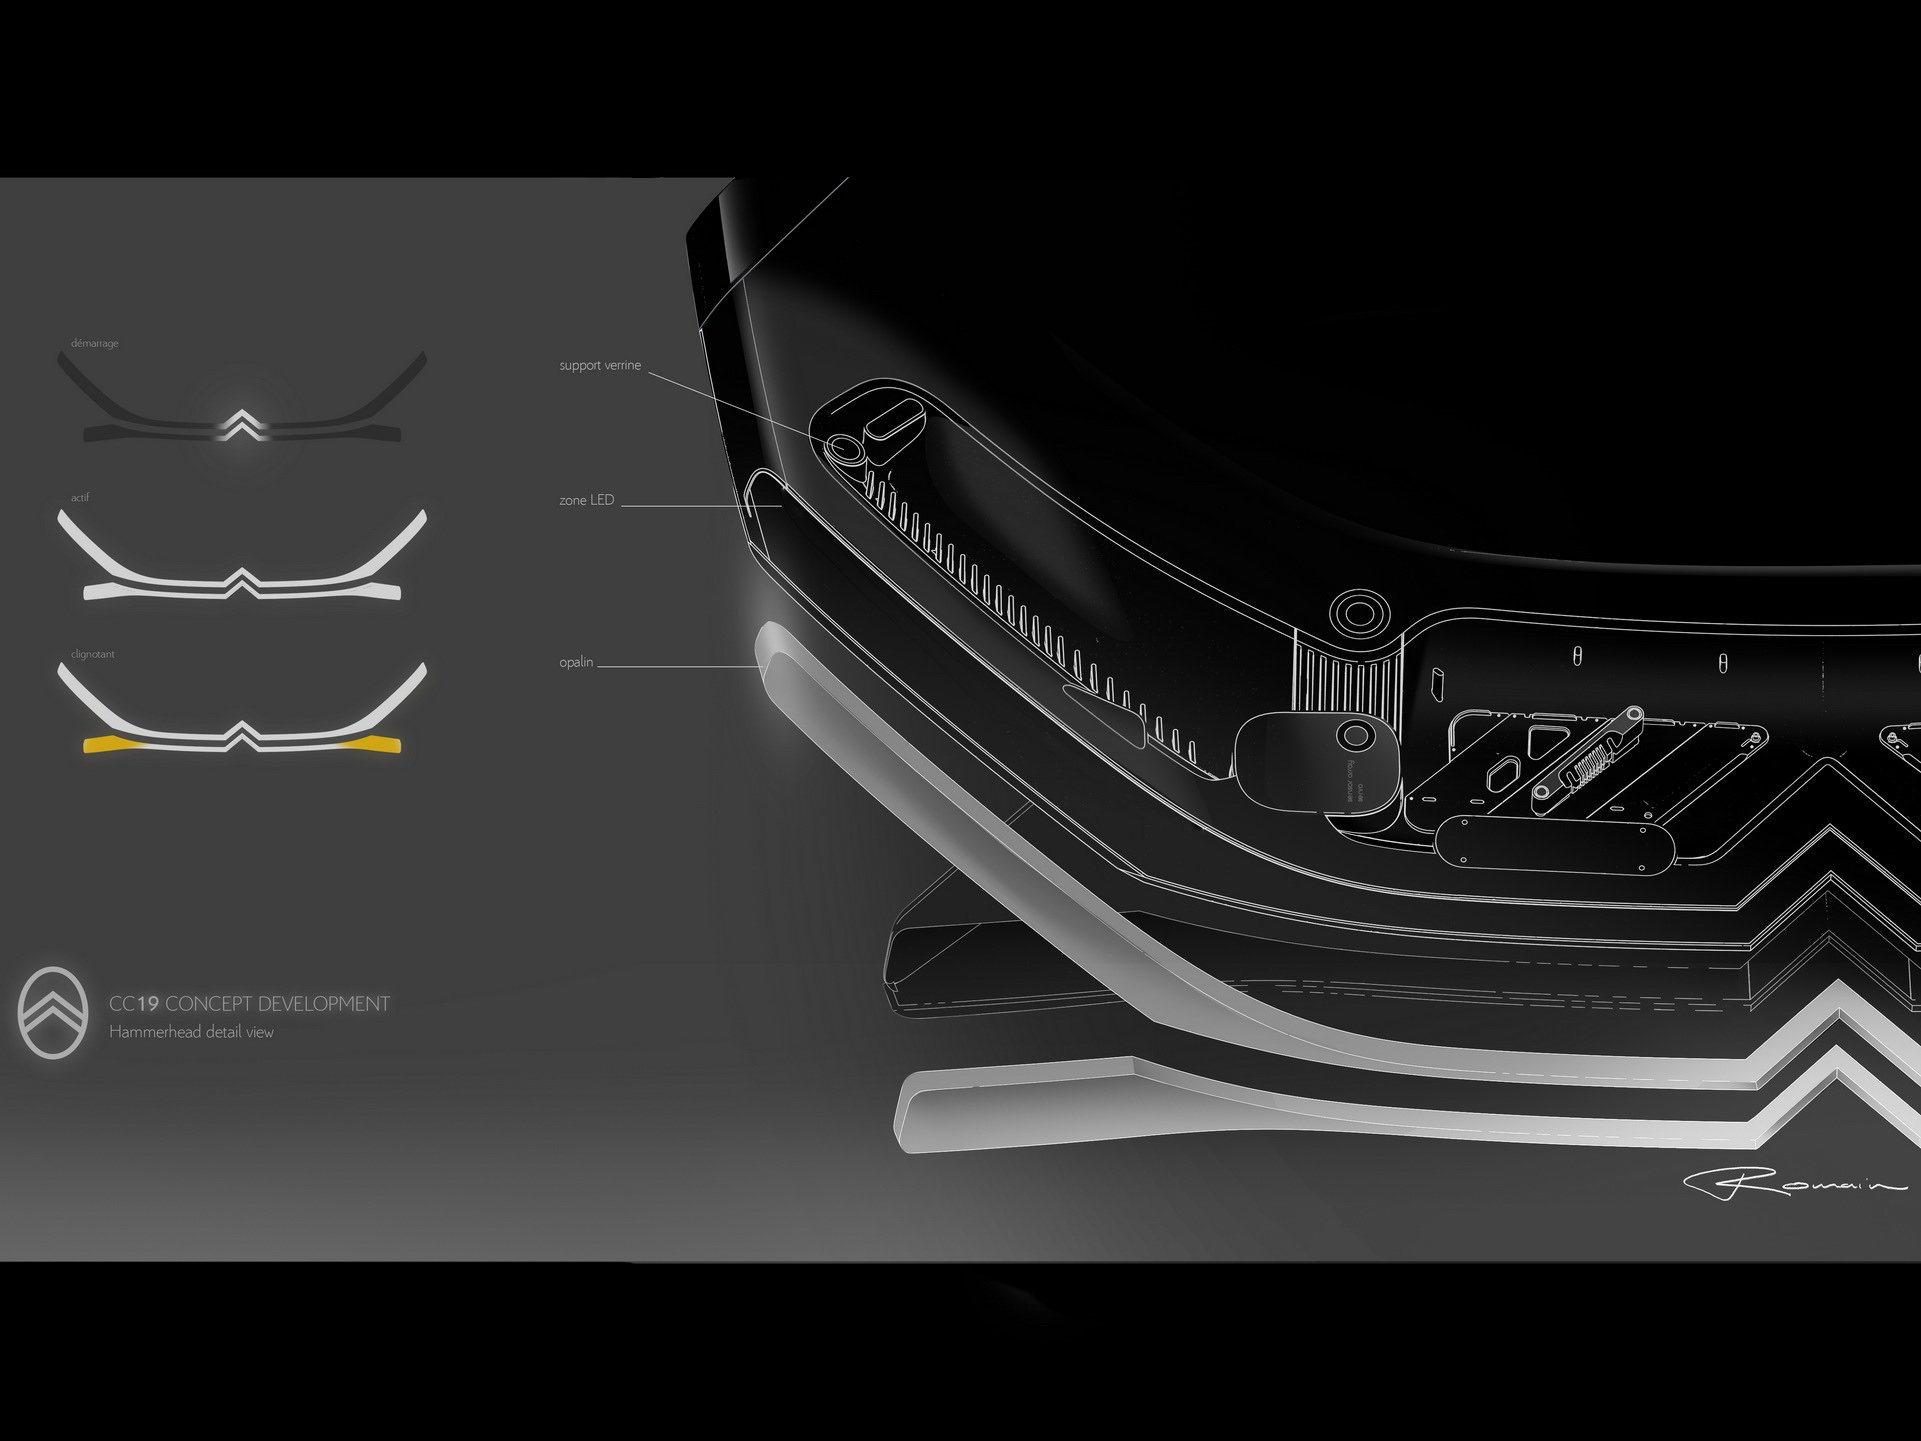 Citroen 19_19 Concept, 2019 - Design Sketch